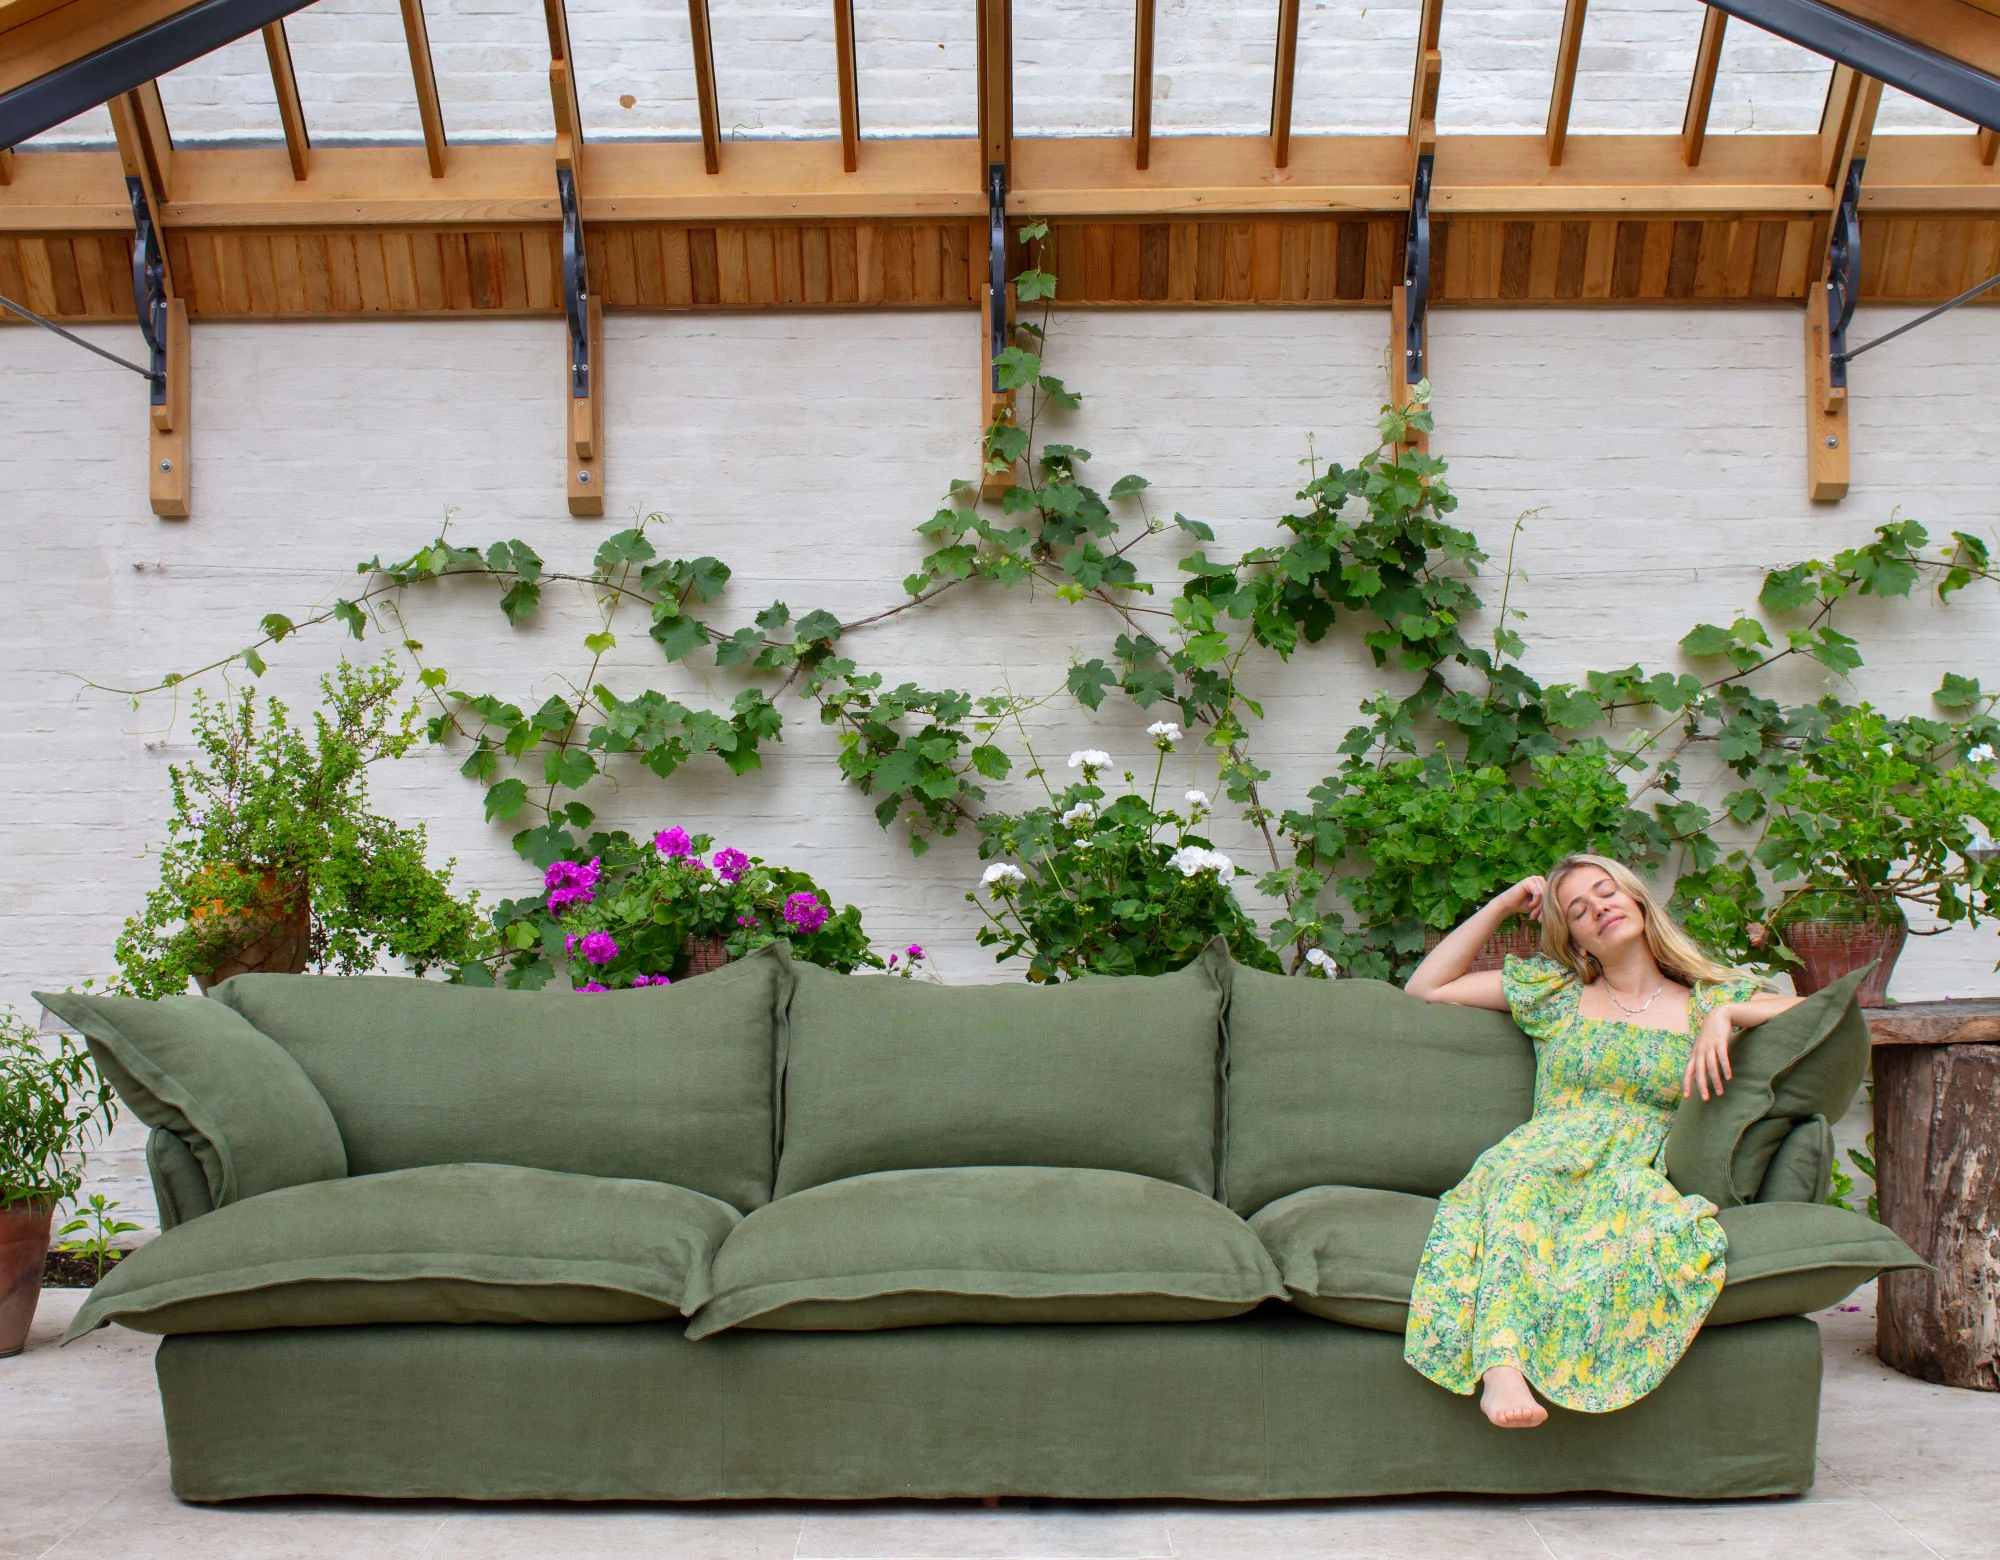 Maker and Son Malachite green Italian linen, Song pillow edge 3 seater large sofa.